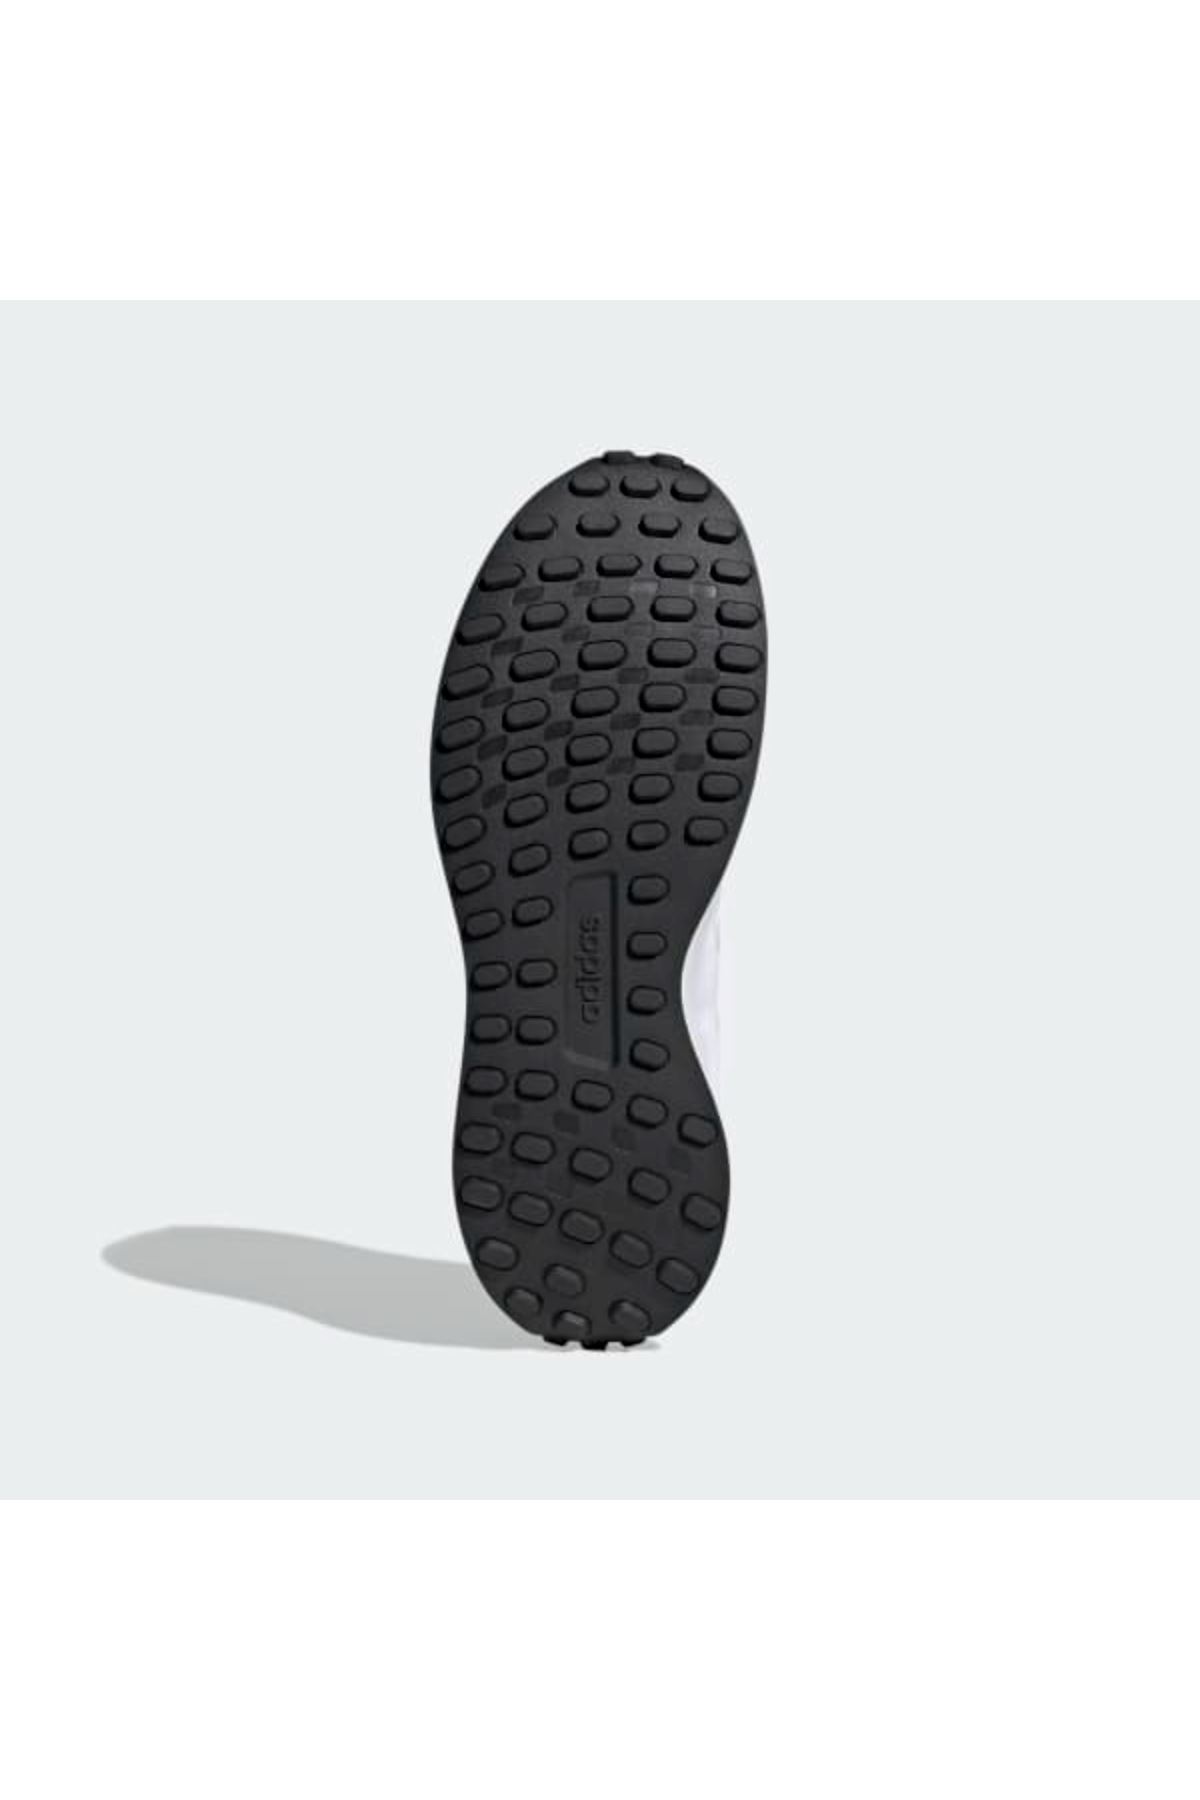 Adidas Run 70S Erkek Siyah Spor Ayakkabı - GX3090